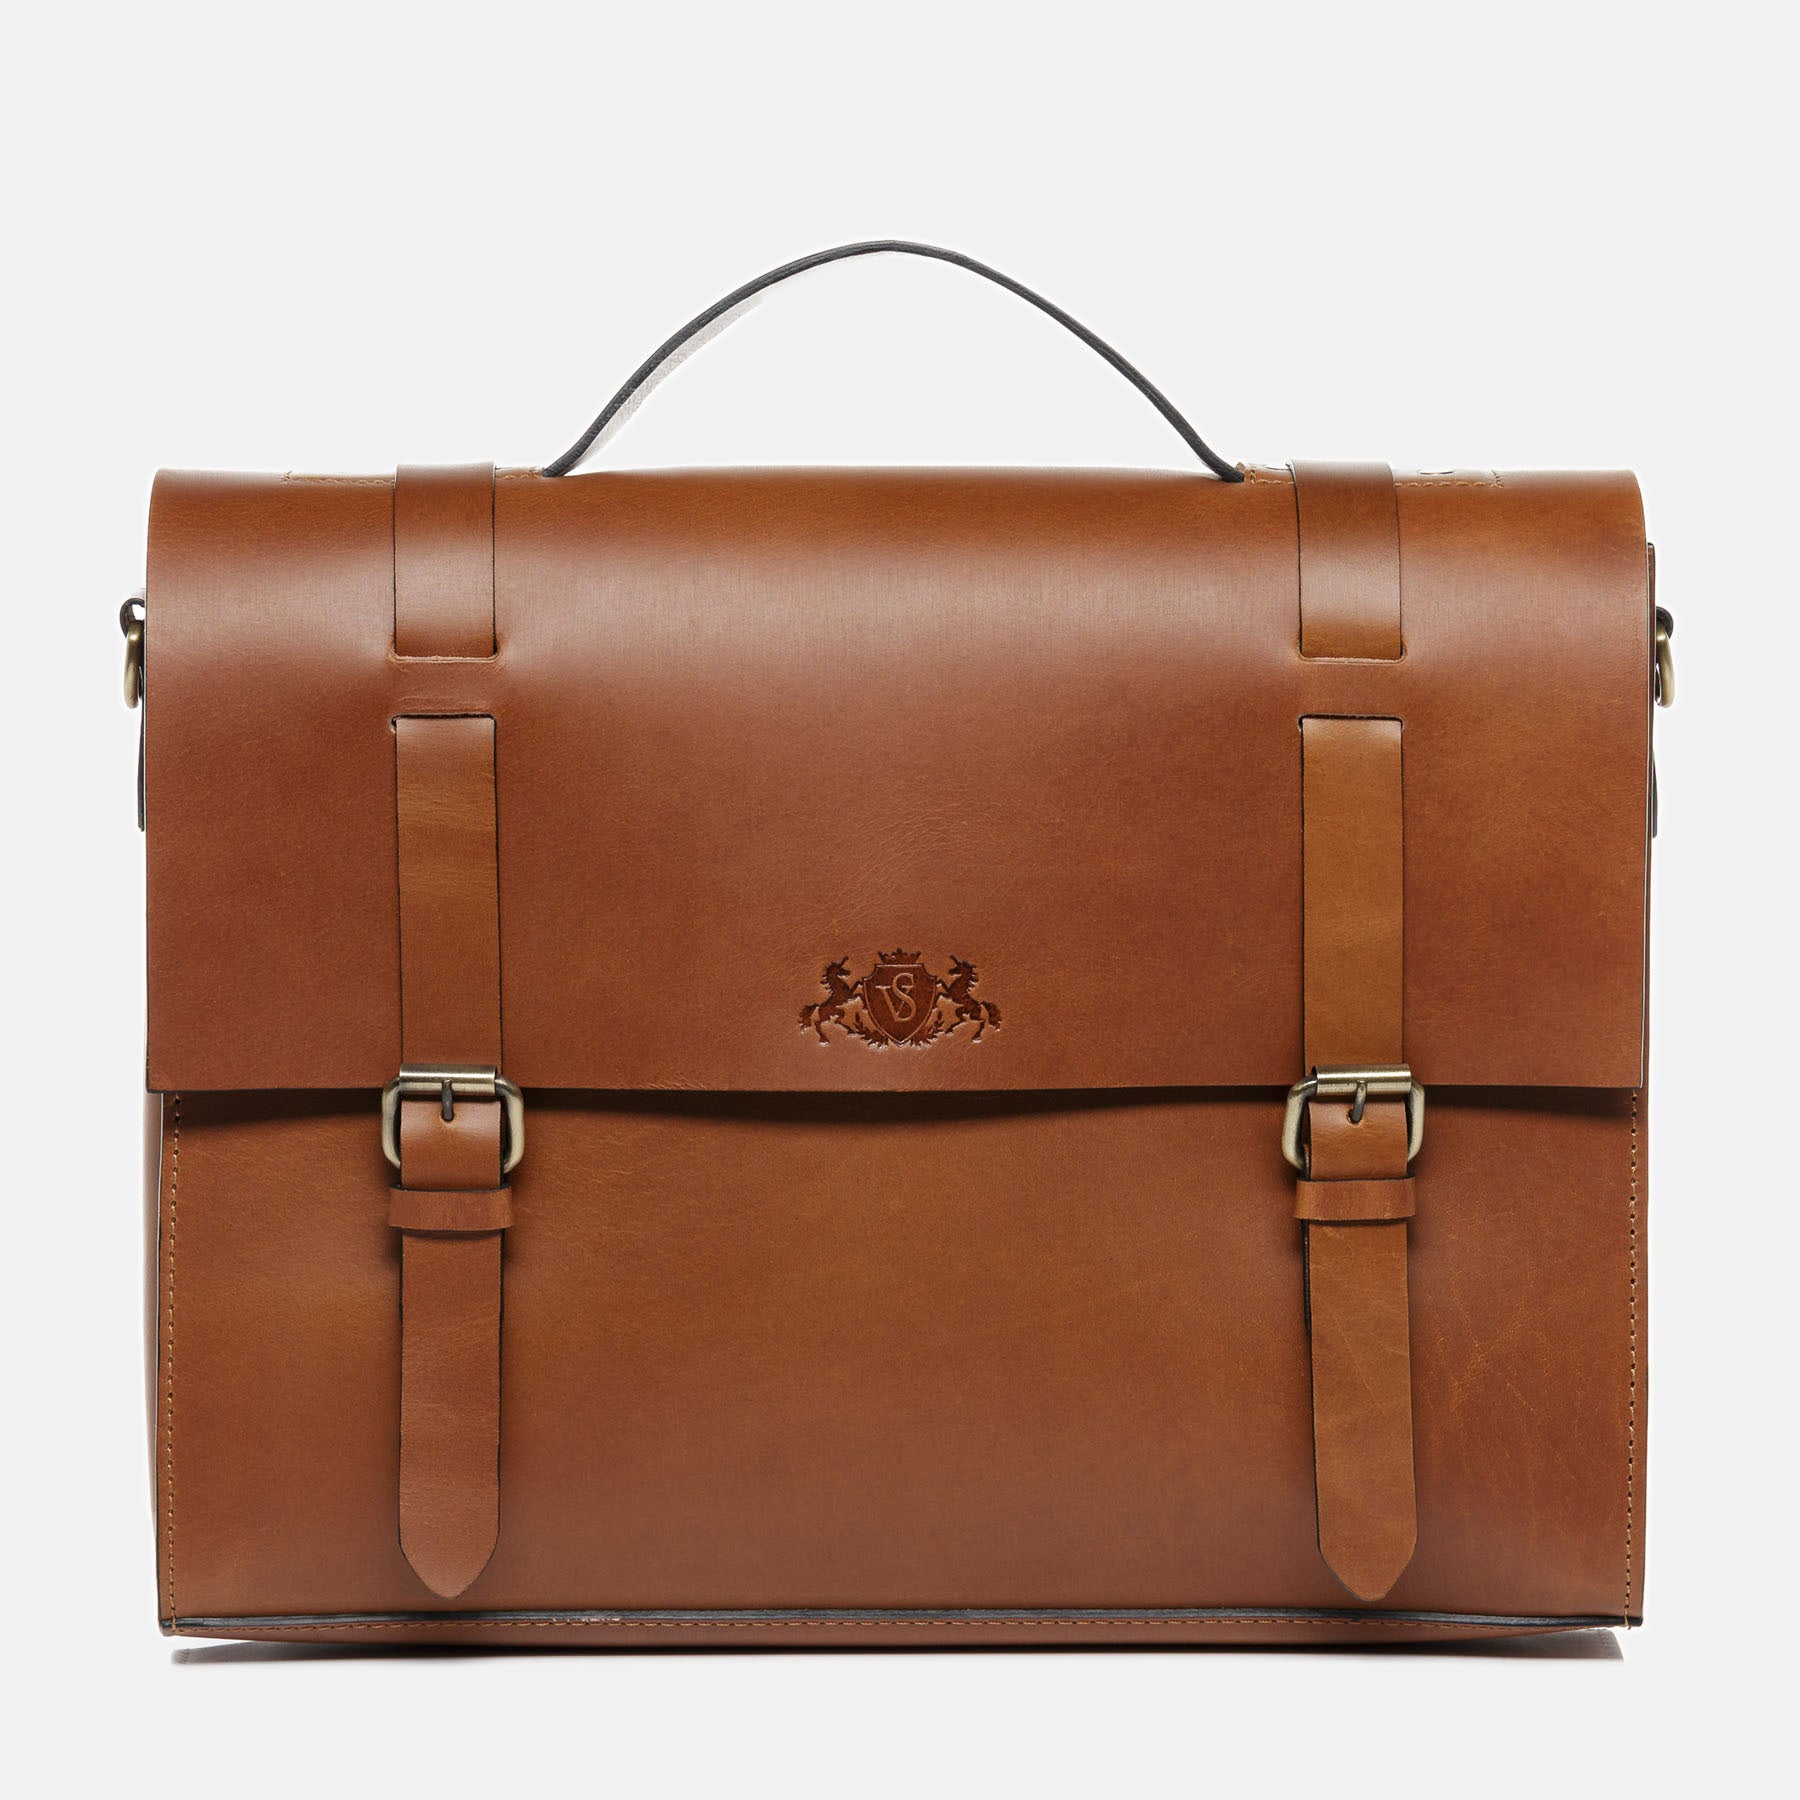 Briefcase BOSTON saddle leather light brown